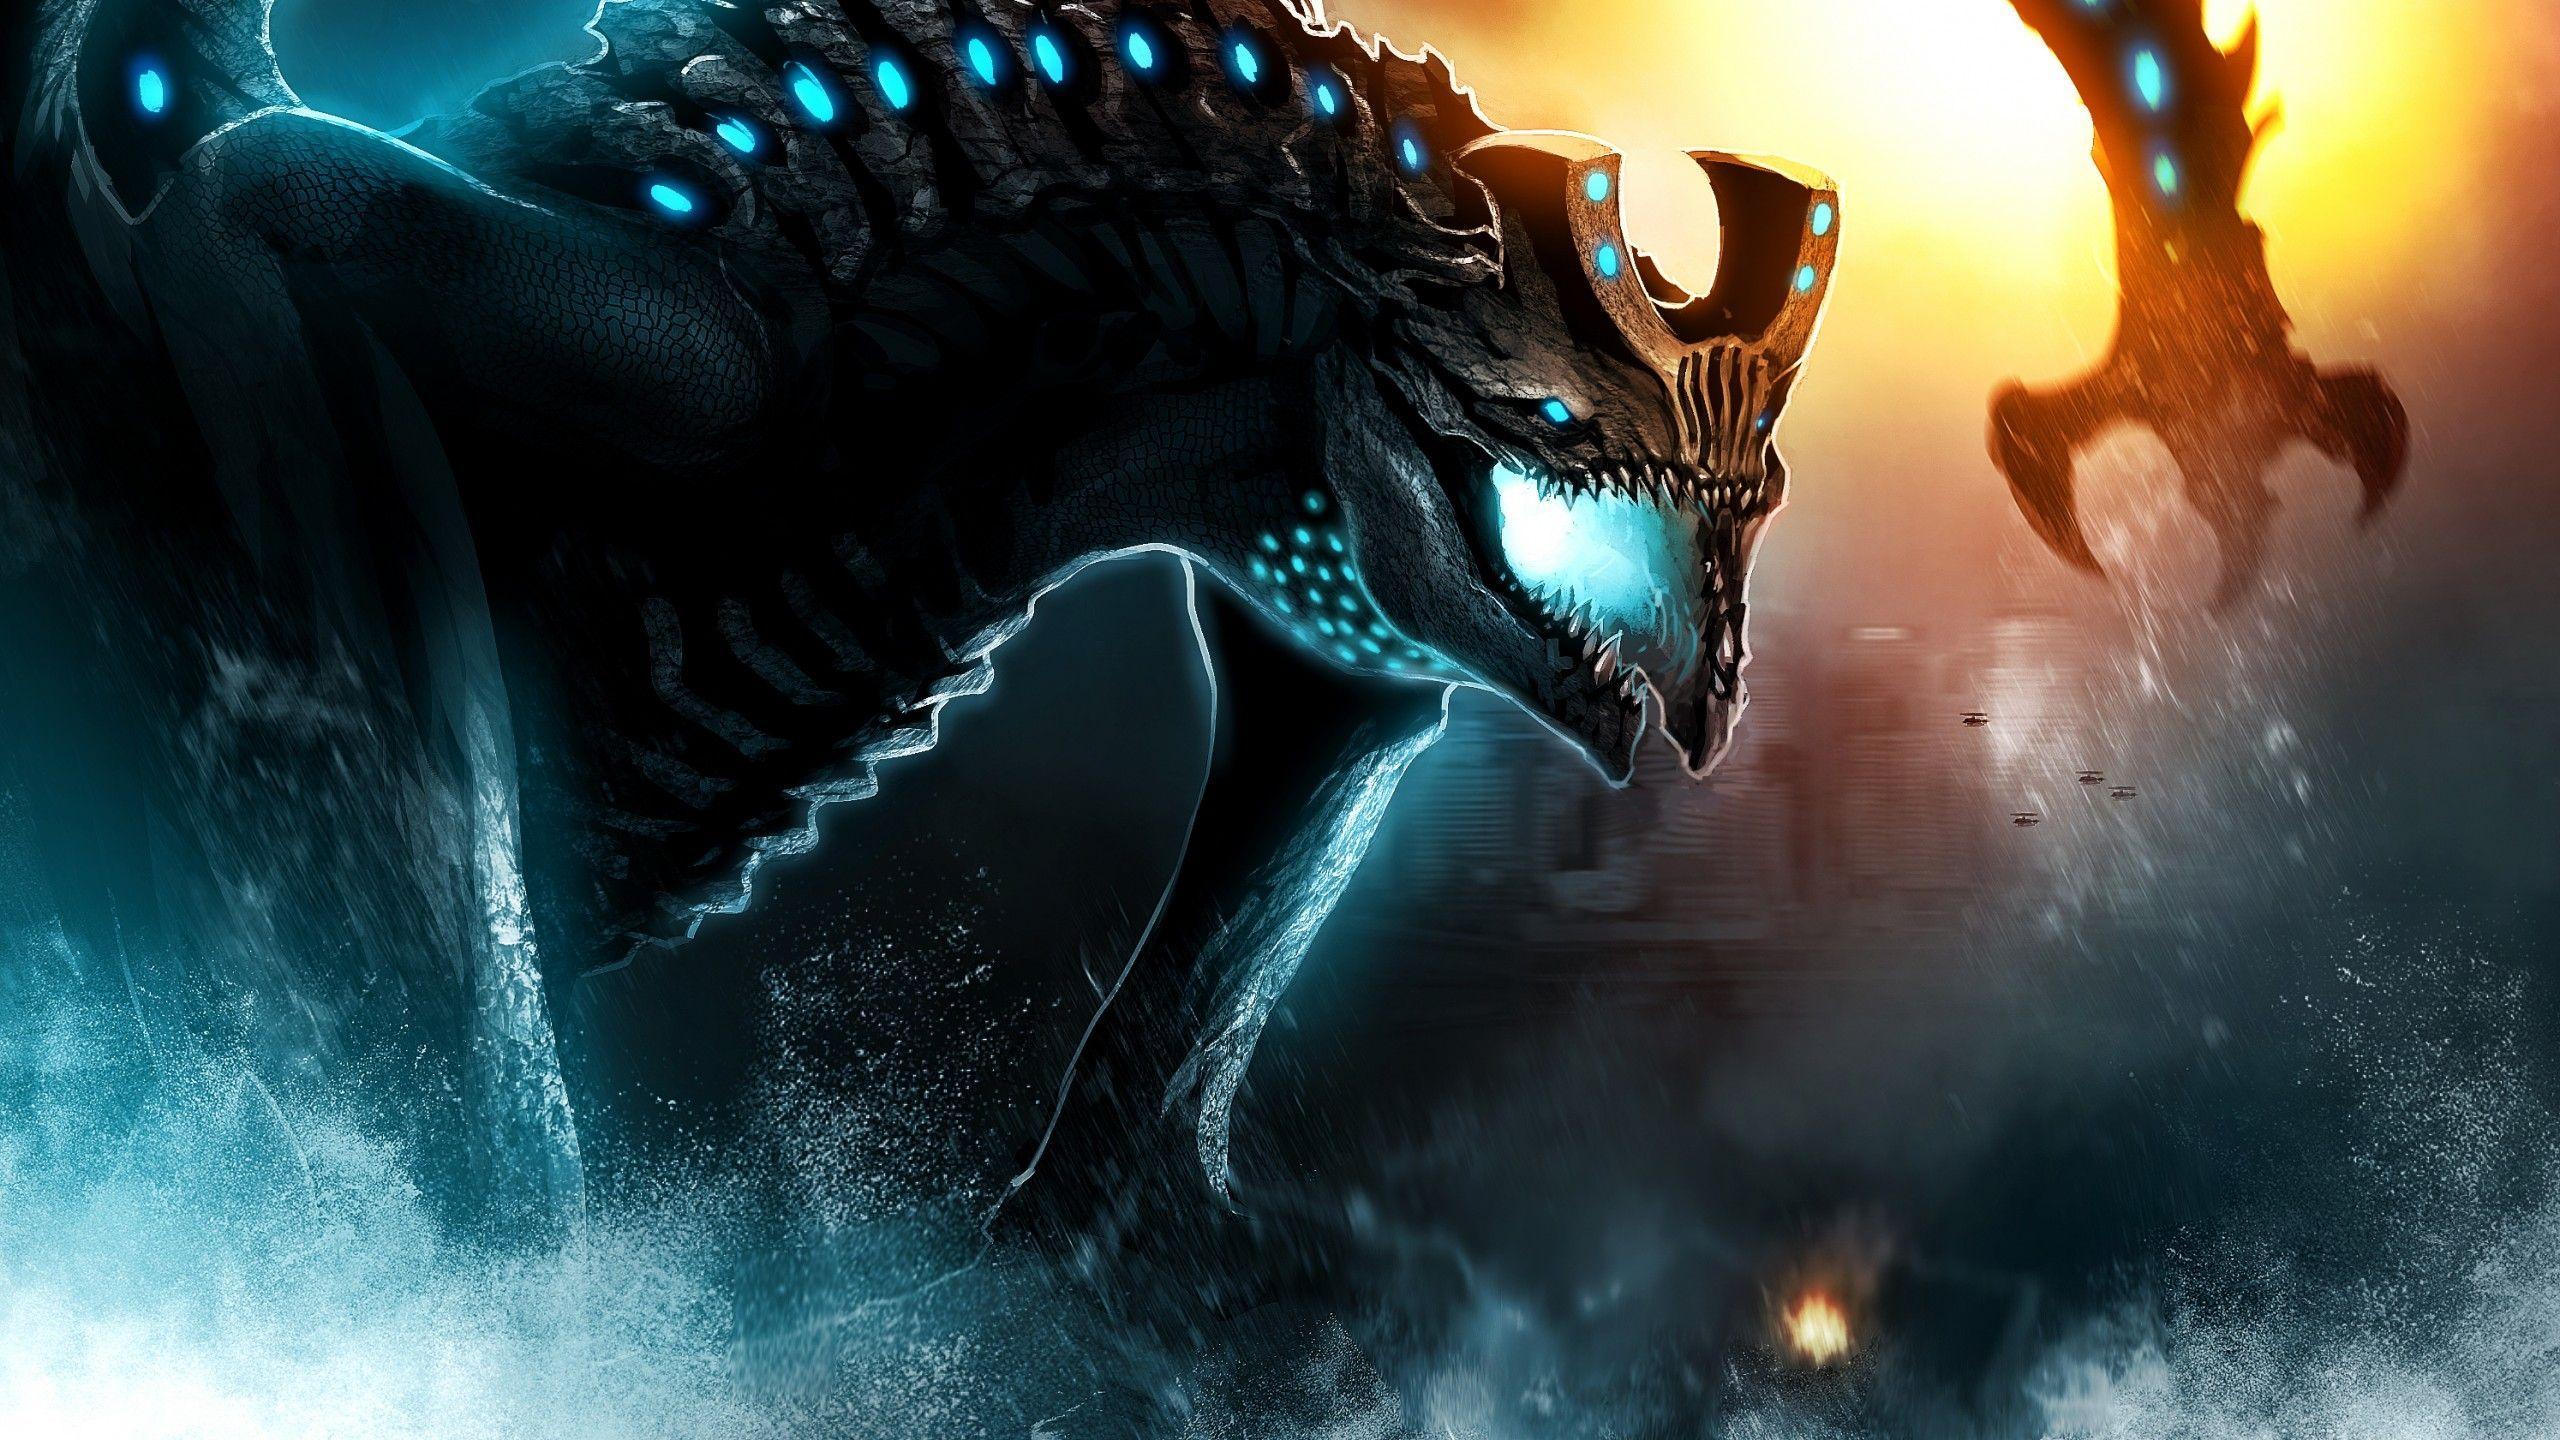 Godzilla Wallpaper plus Kaiju for Android - Free App Download